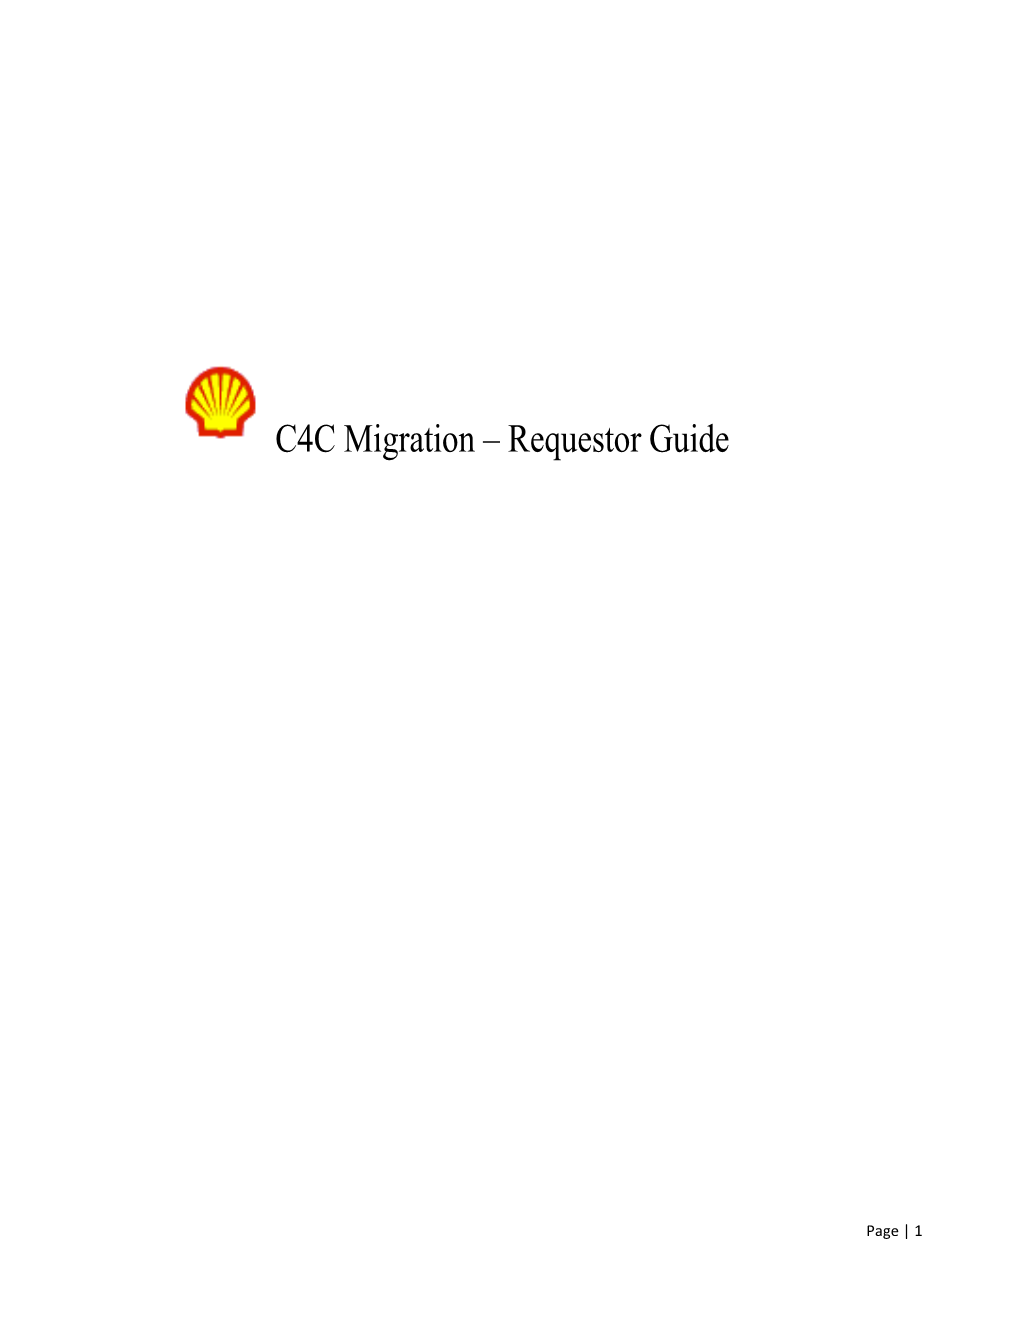 1.C4C User Migration Requestor Guide